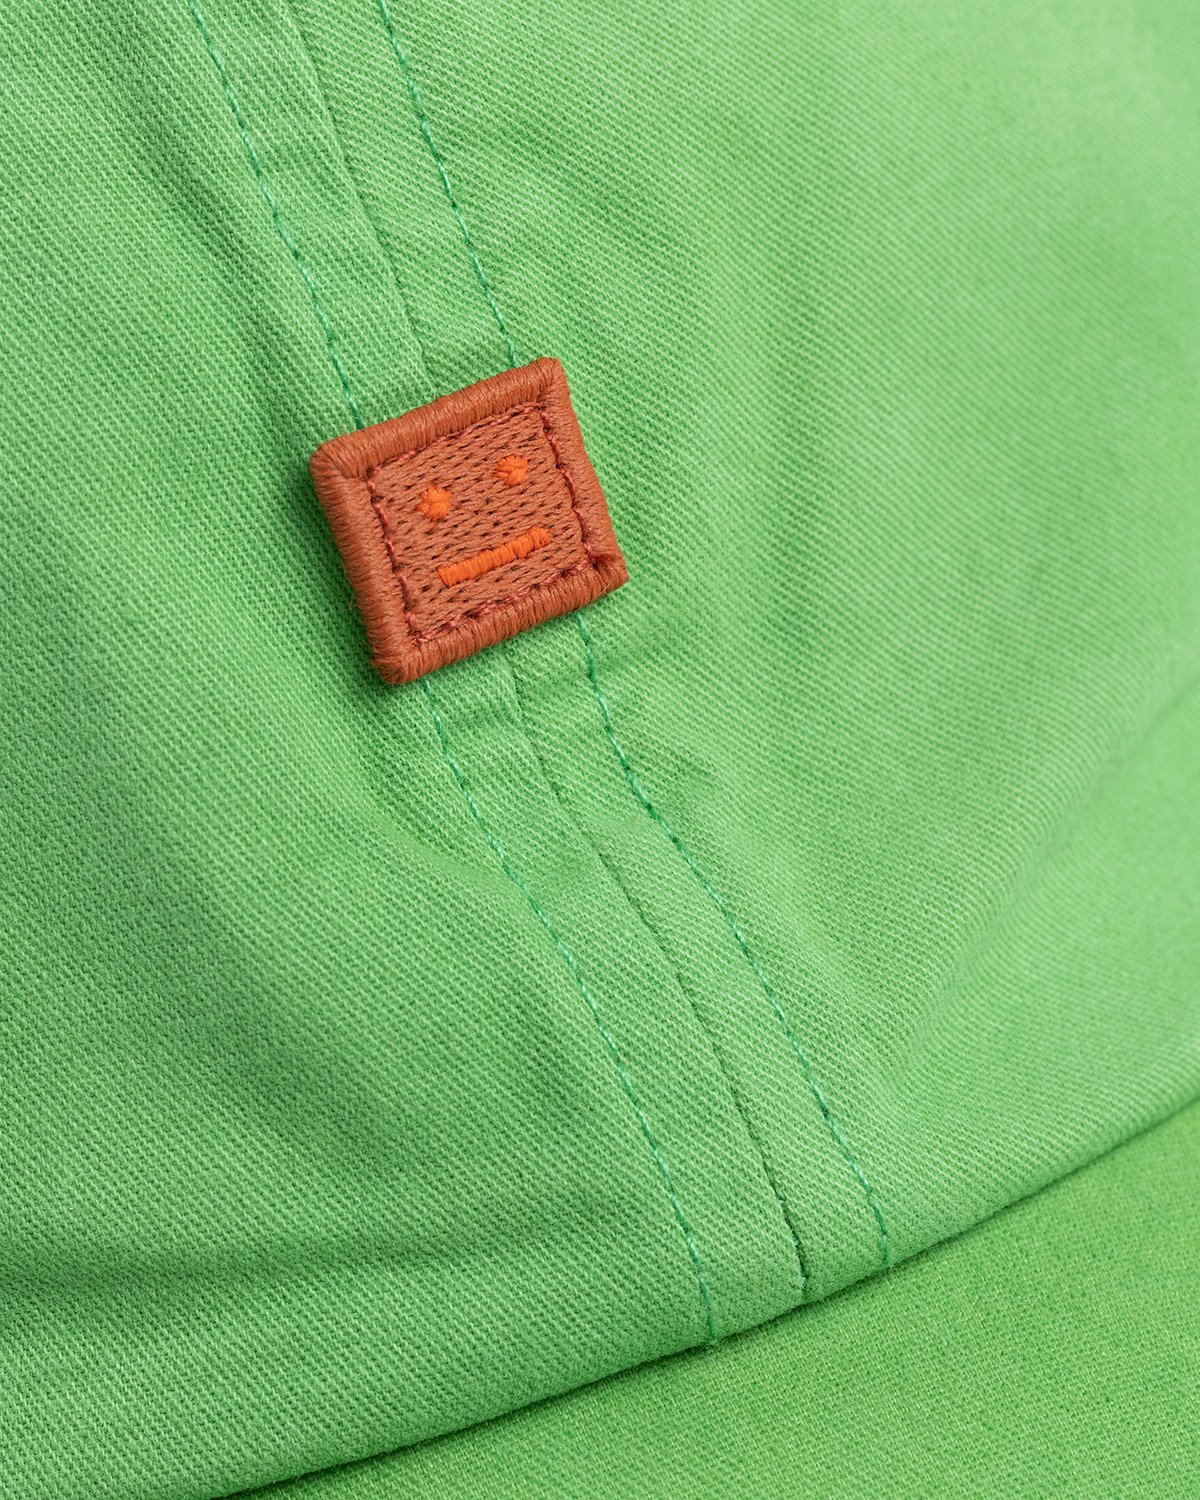 Acne Studios - 6-Panel Baseball Cap Green - Accessories - Green - Image 6